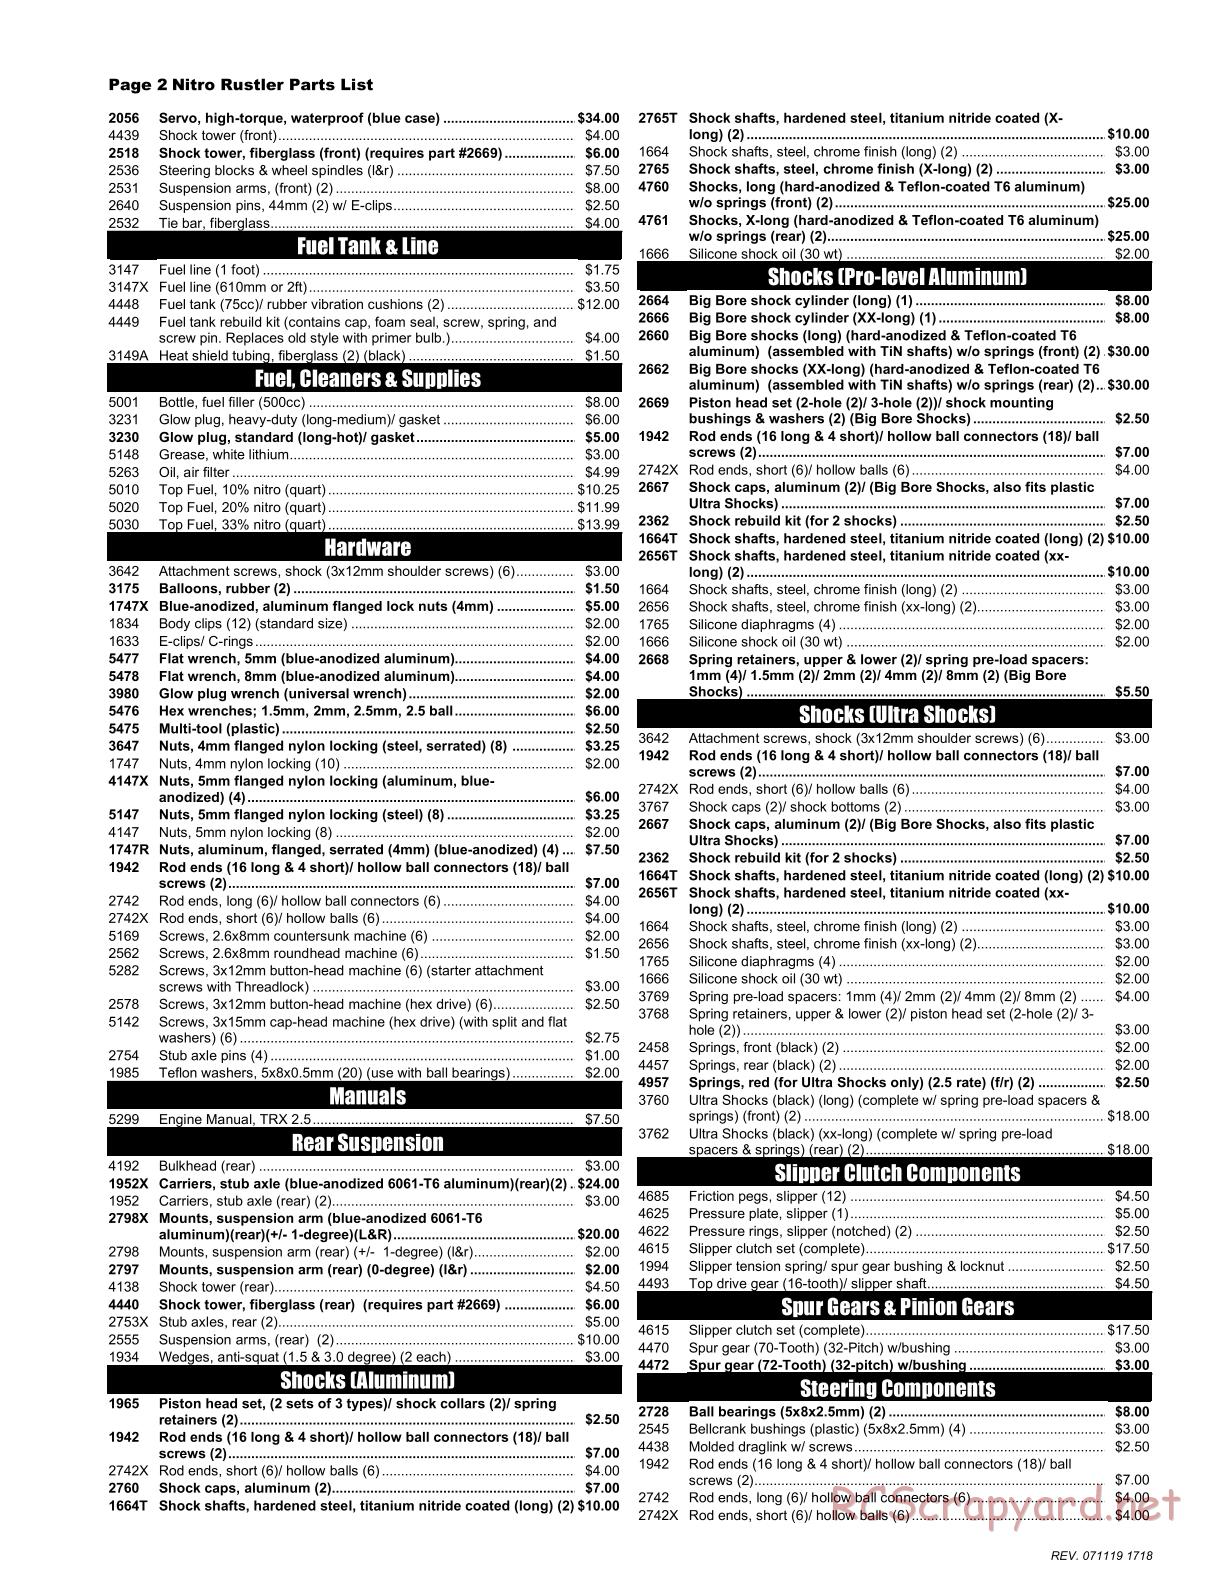 Traxxas - Nitro Rustler (1997) - Parts List - Page 2